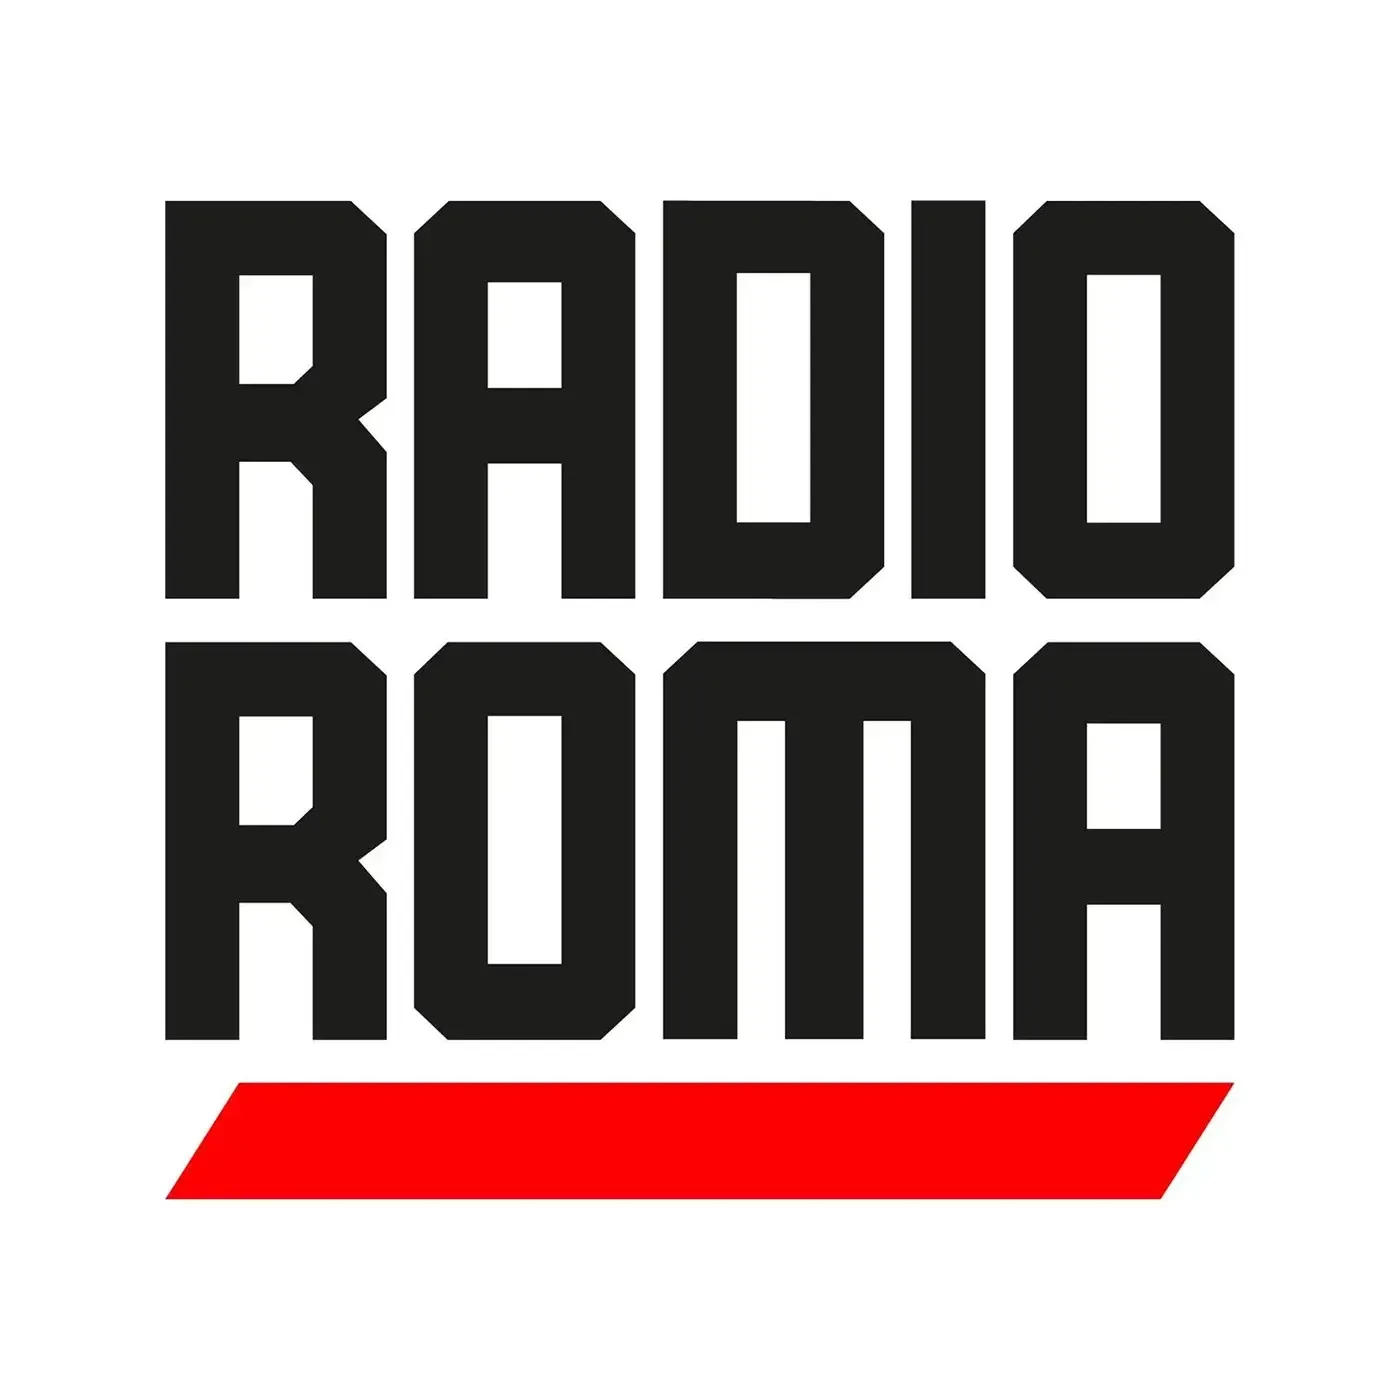 Radio Roma TV